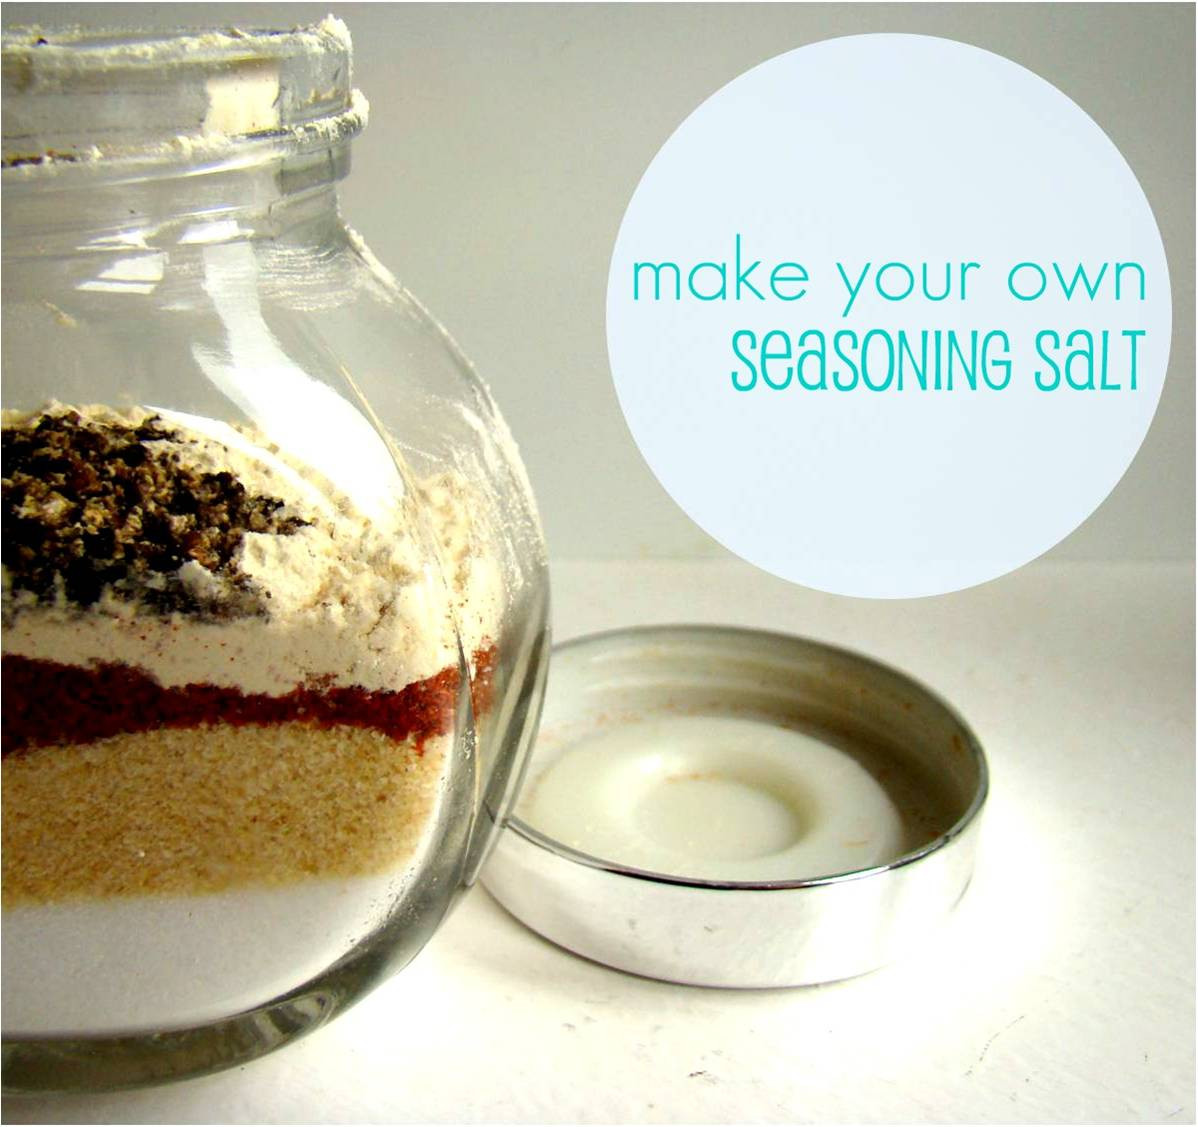 Best ideas about DIY Seasoned Salt
. Save or Pin Family Feedbag Make your own seasoning salt Now.